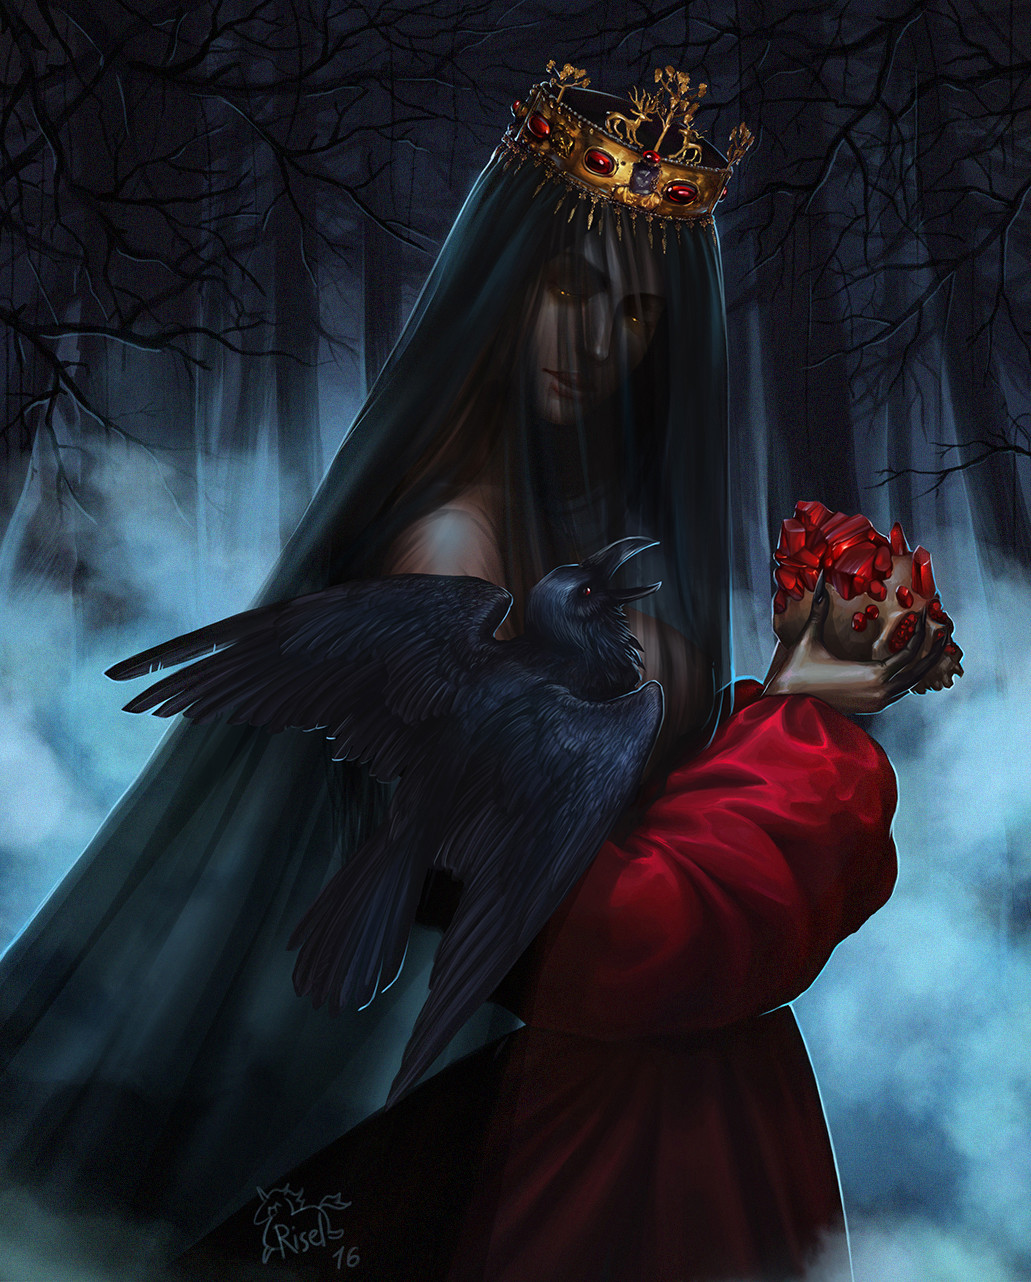 Tate S Women Crow Veils Brunette Red Dress Night Skull Fantasy Girl Dark Fantasy Glowing Eyes Animal 1031x1282